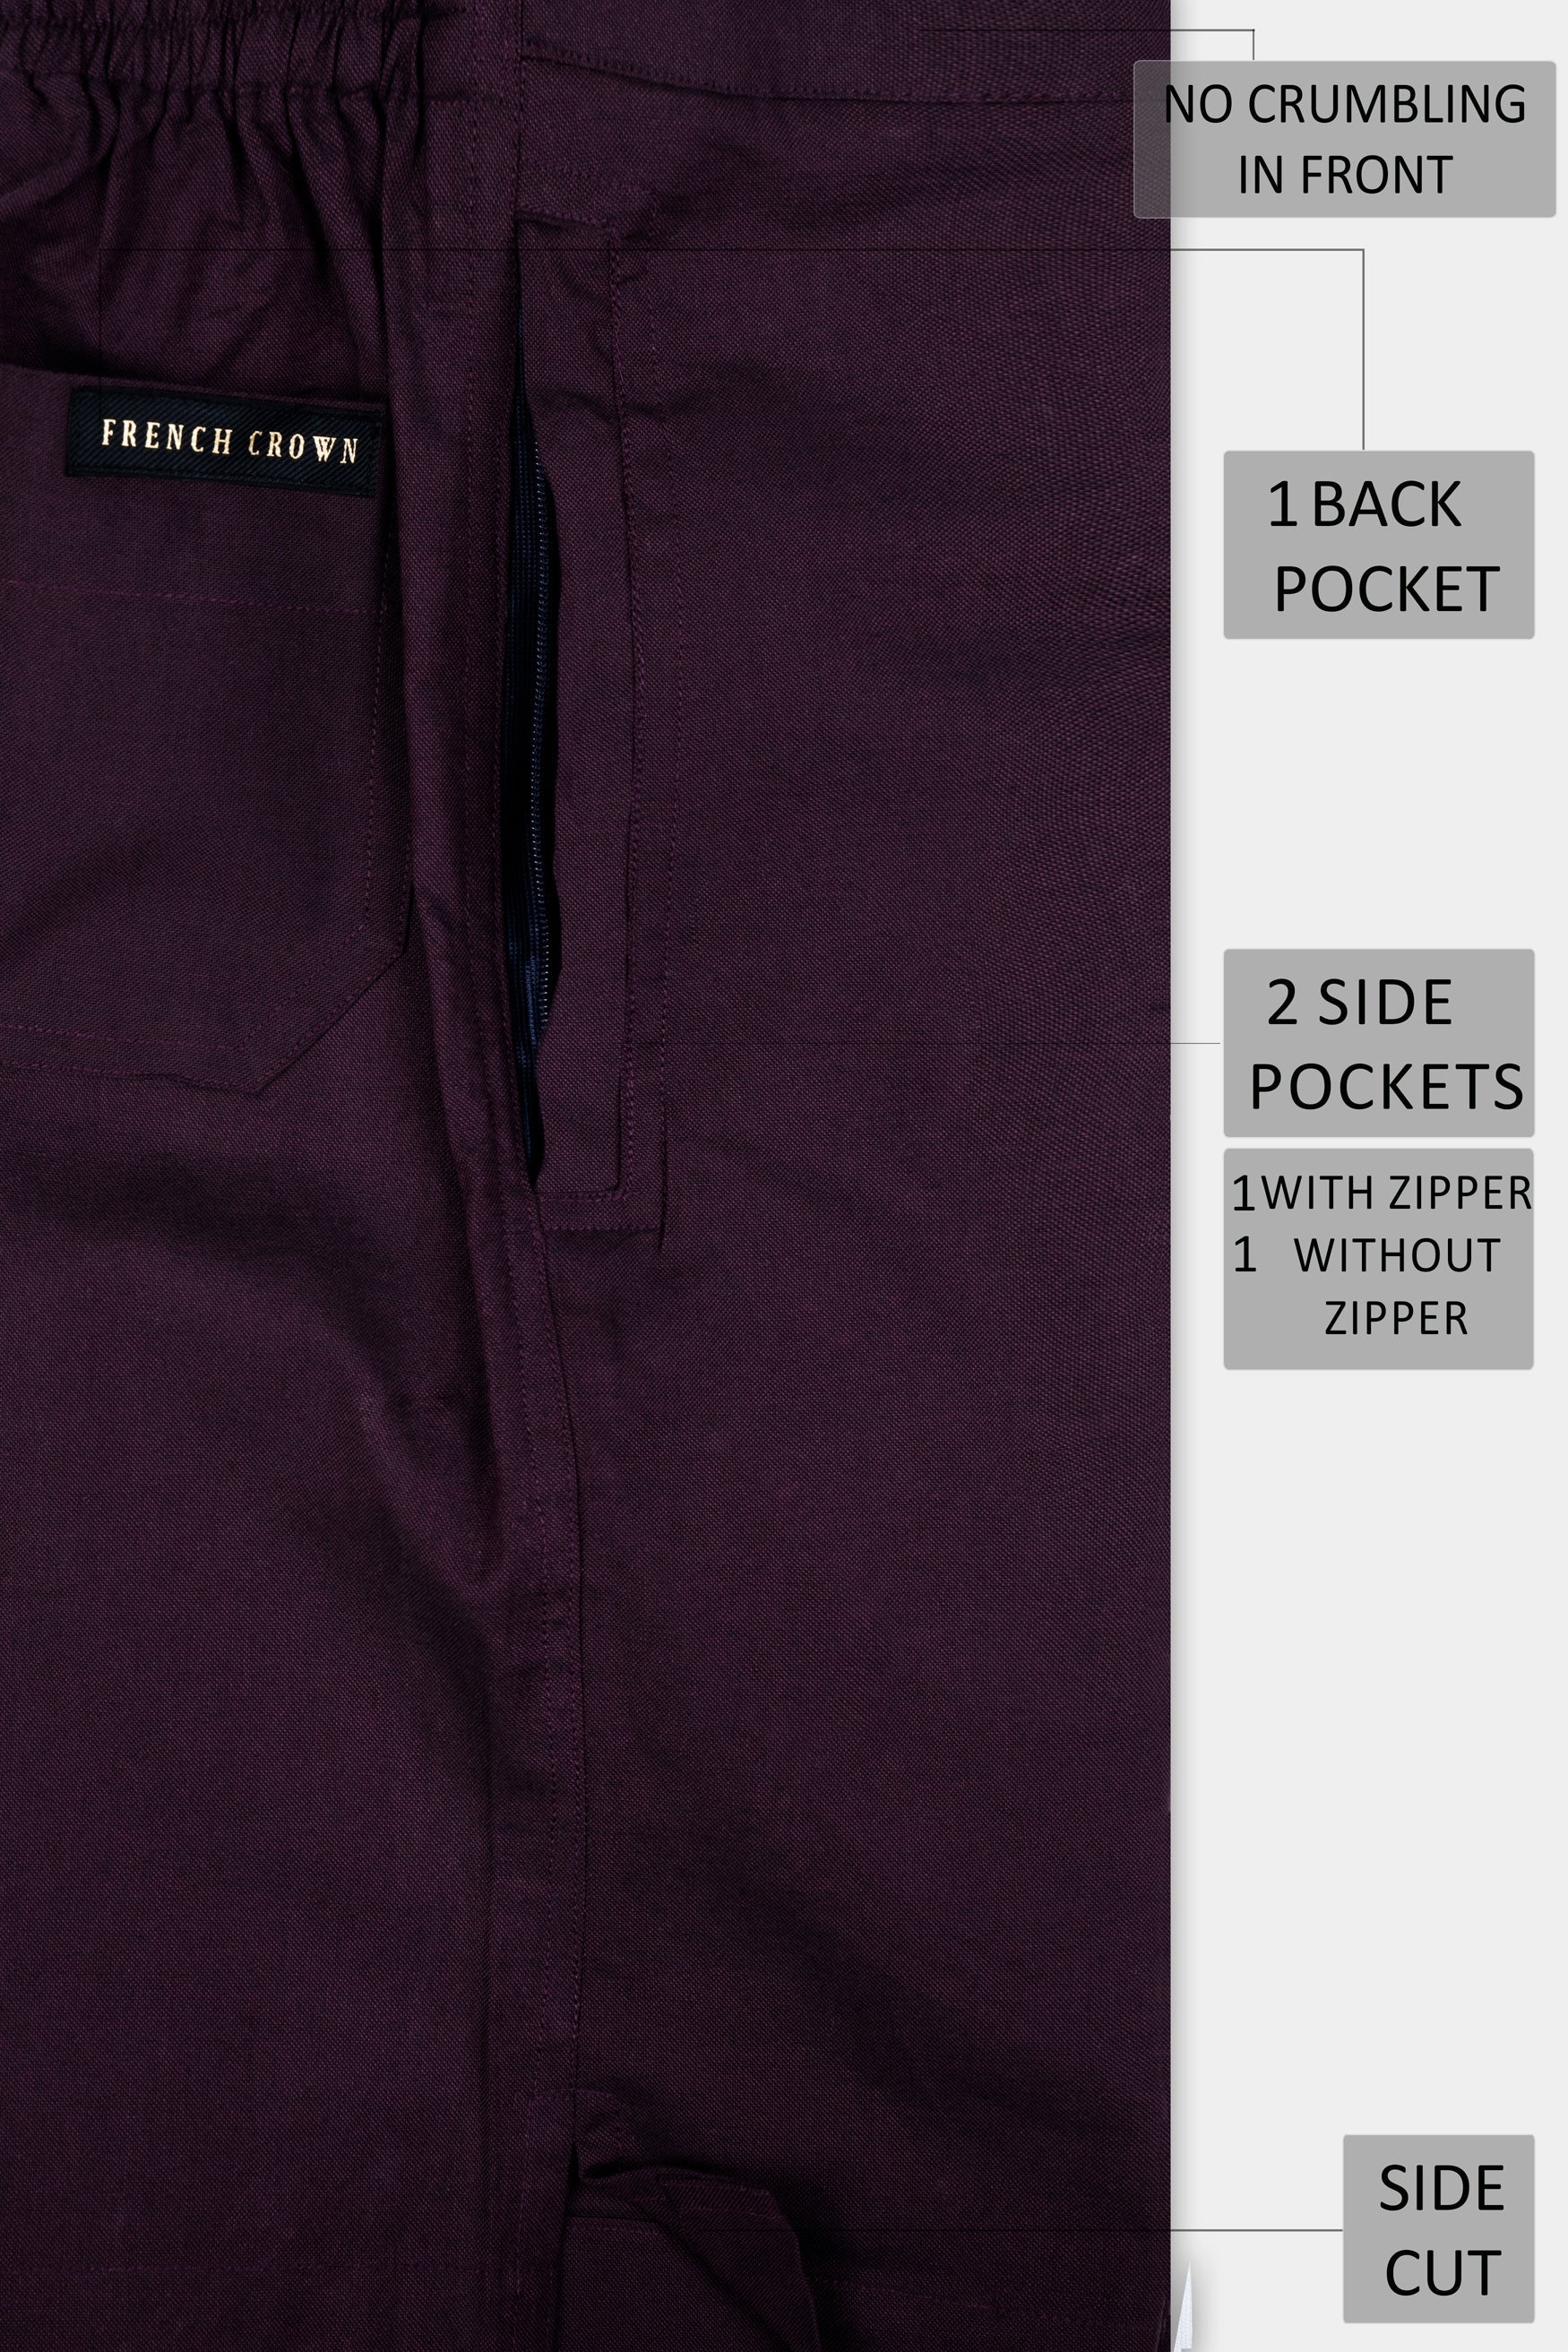 Wine Purple Textured Royal Oxford Shorts